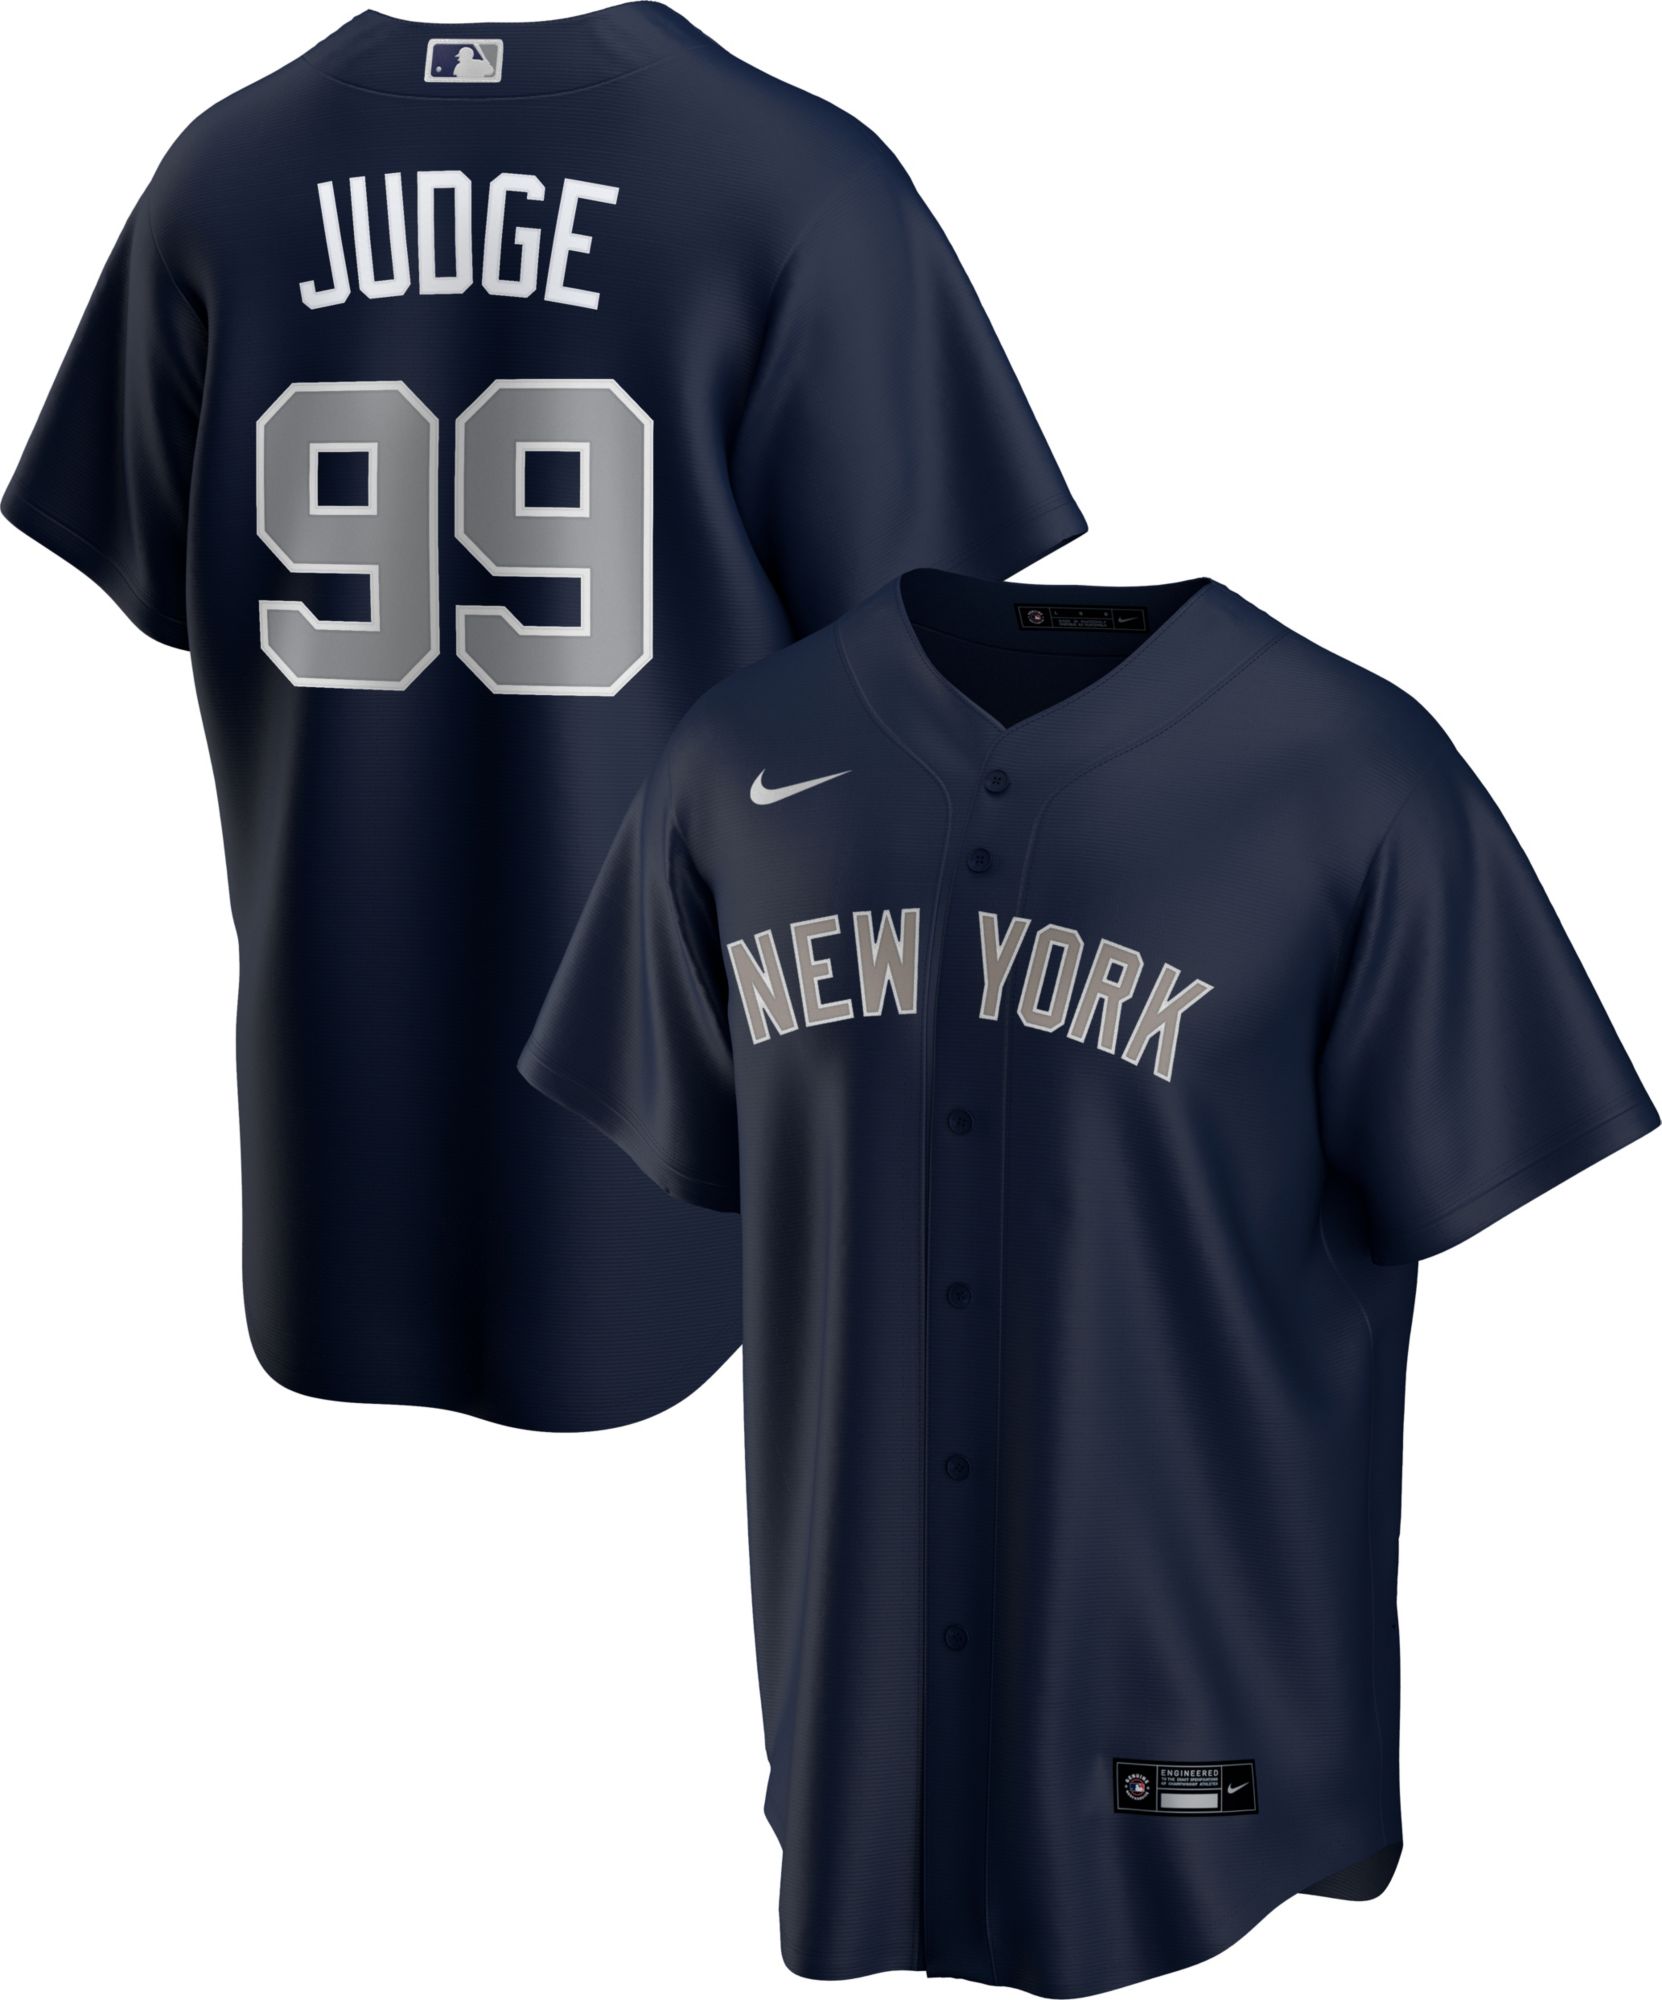 judge 99 shirt